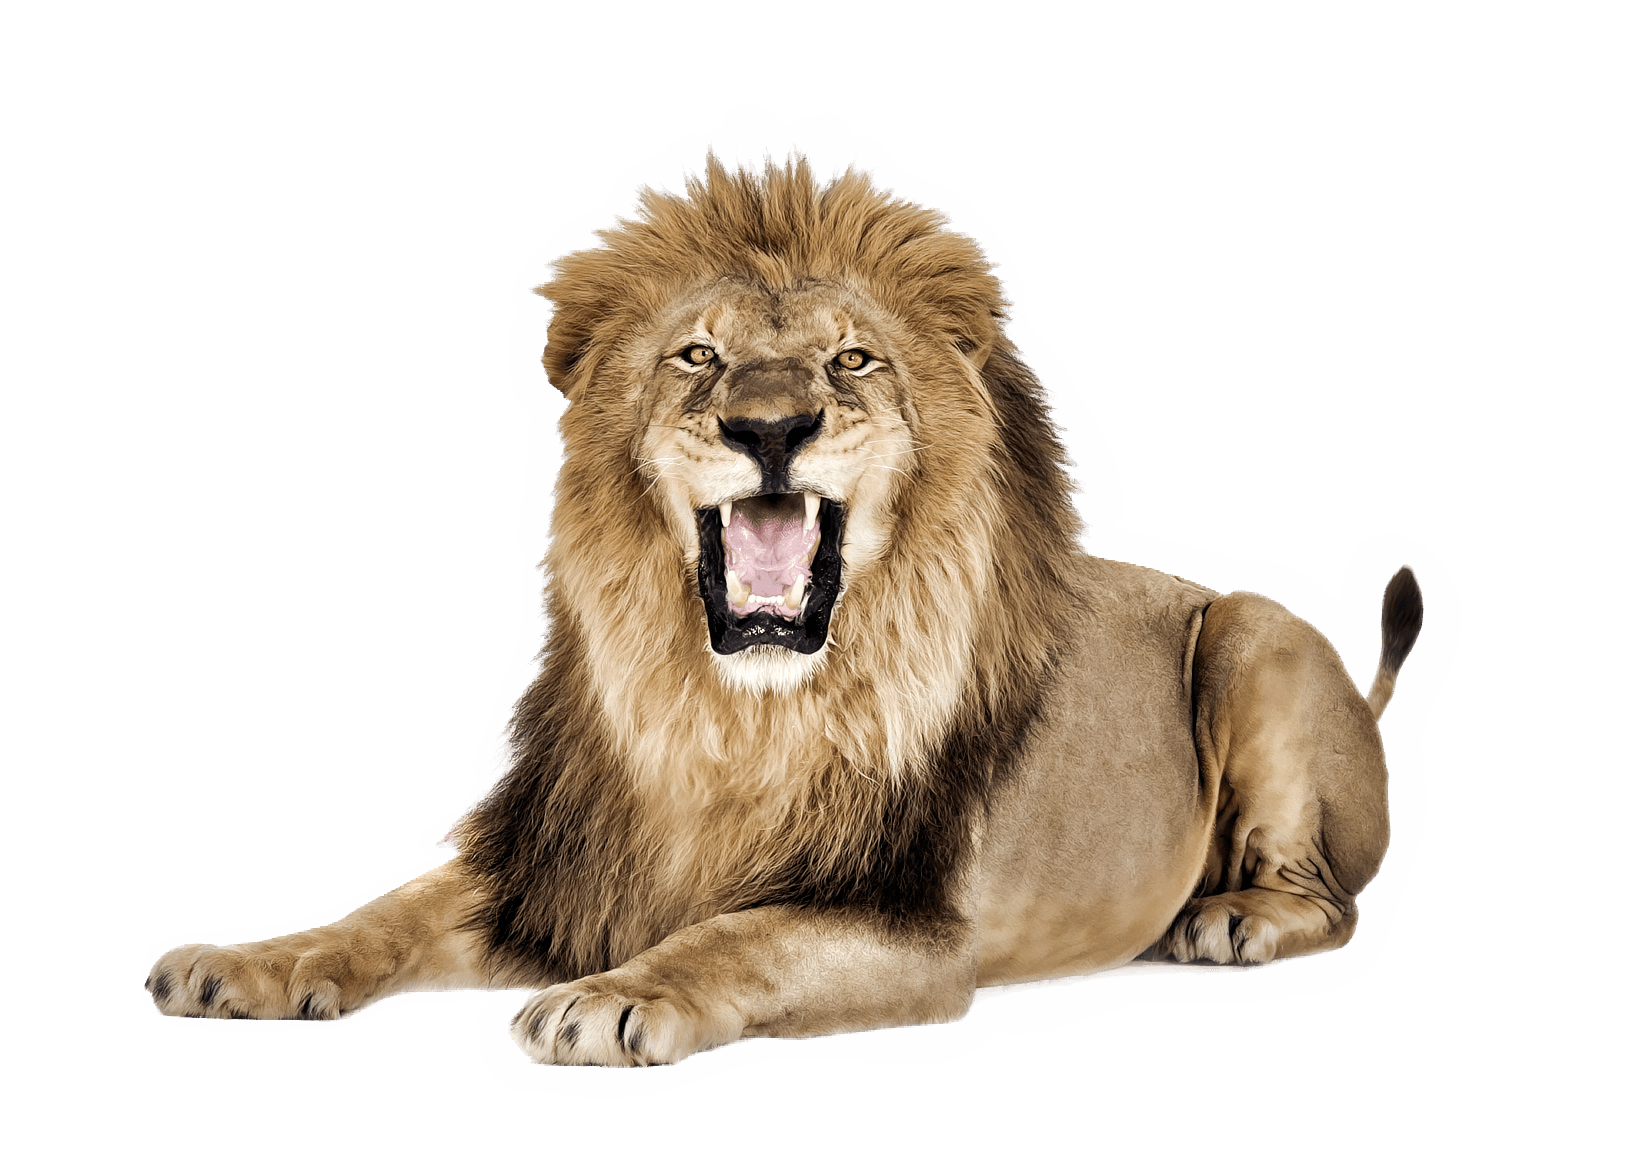 Roaring Lion PNG Image Background